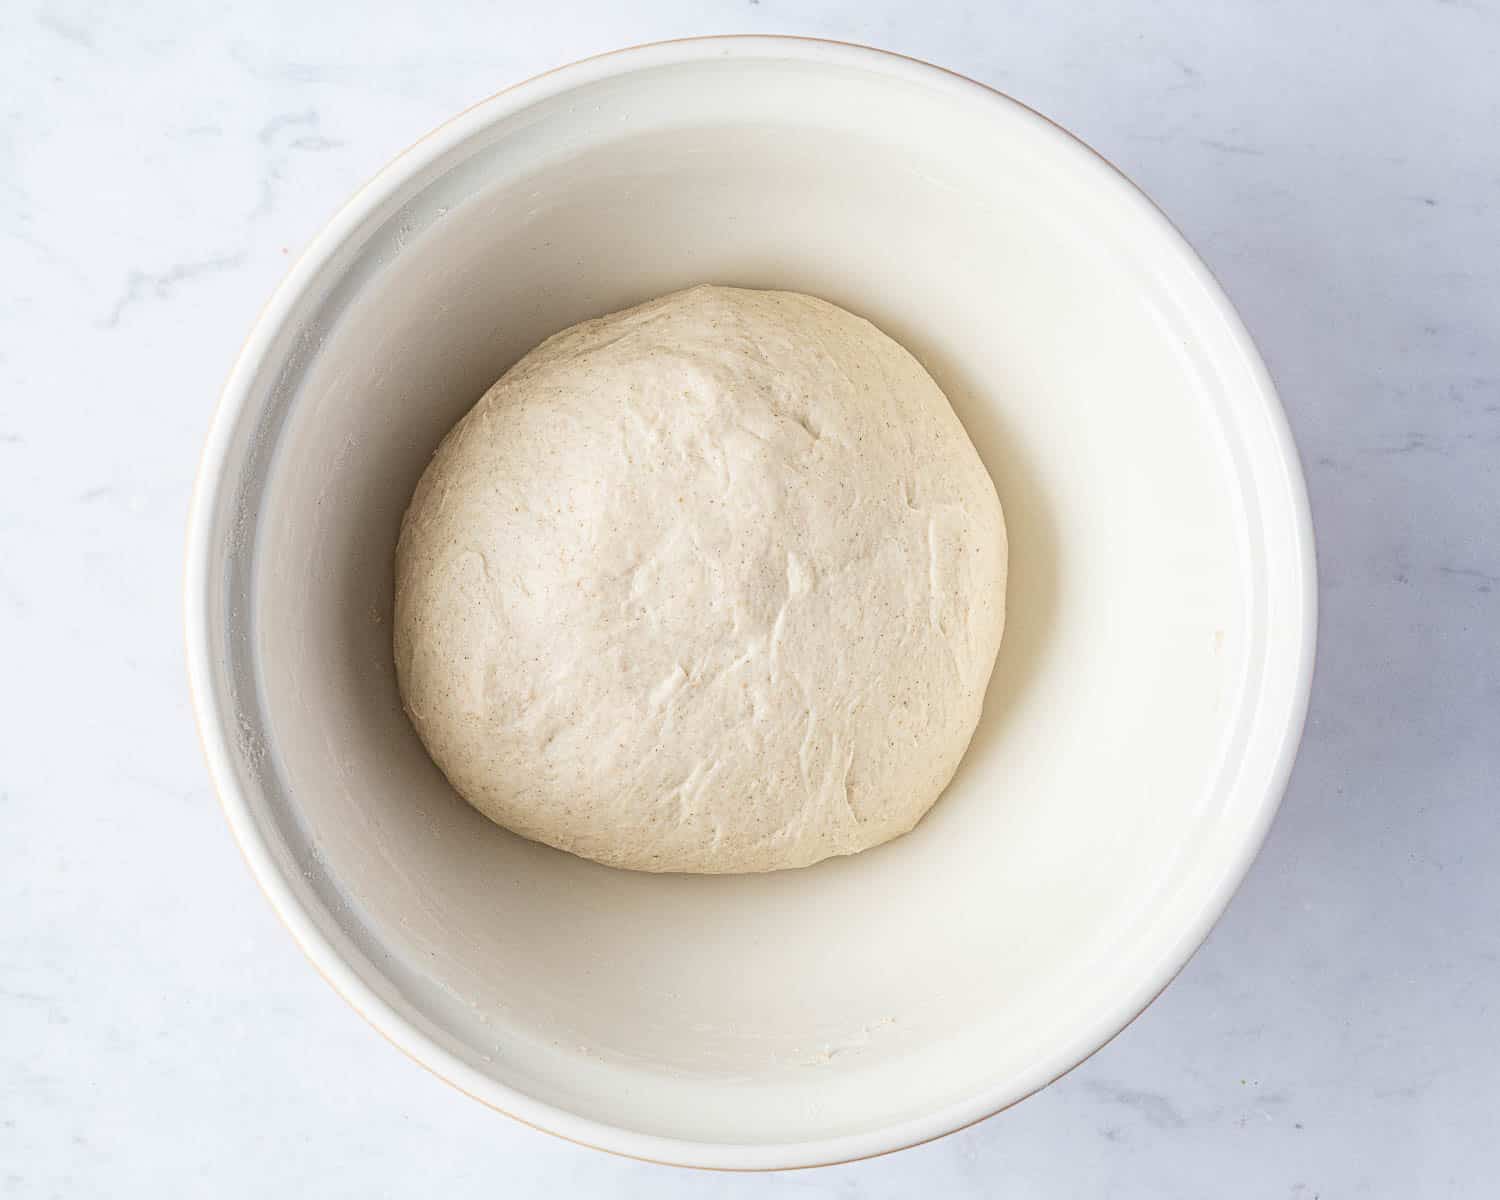 Step 2, the kneaded dough.